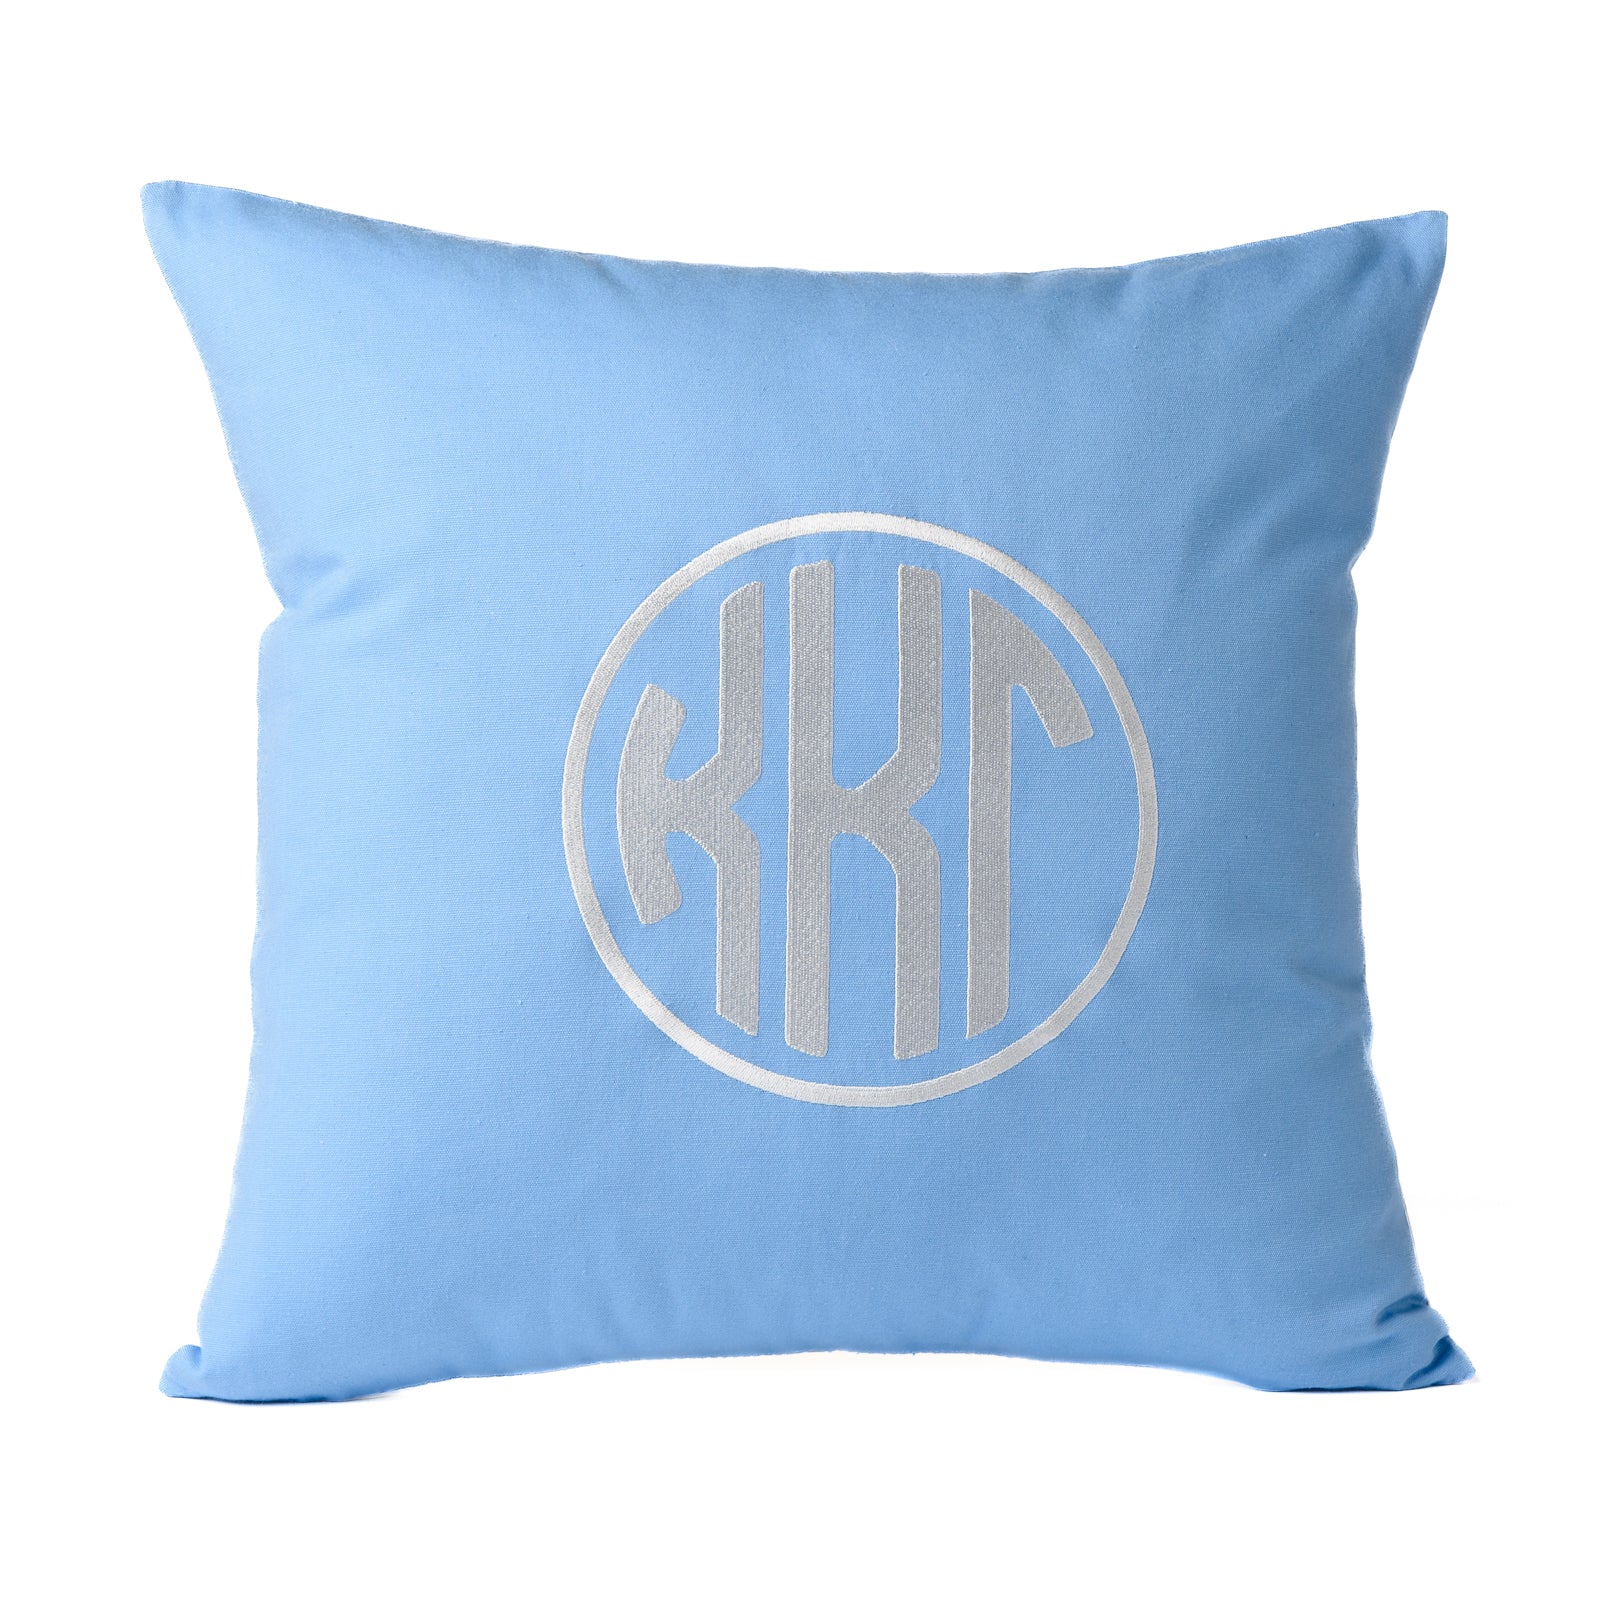 Kappa Kappa Gamma Circle Monogram Pillow